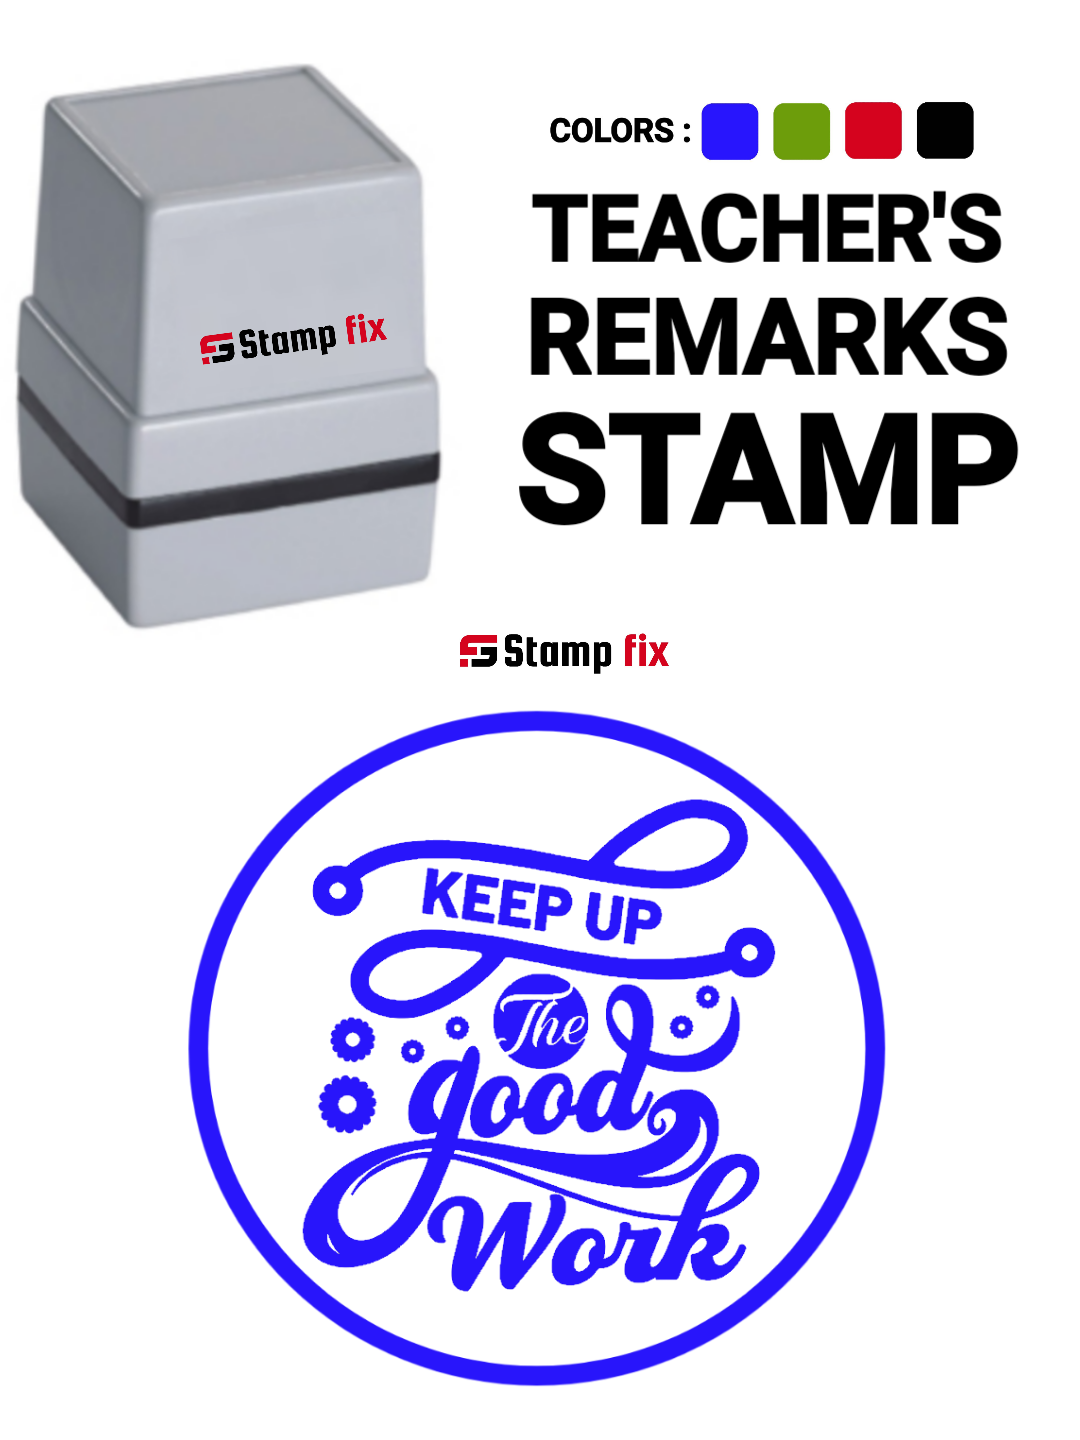 Teachers Remark stamp, Self ink stamp, pre ink stamp, sun stamp, rubber stamp, nylon stamp, polymer stamp